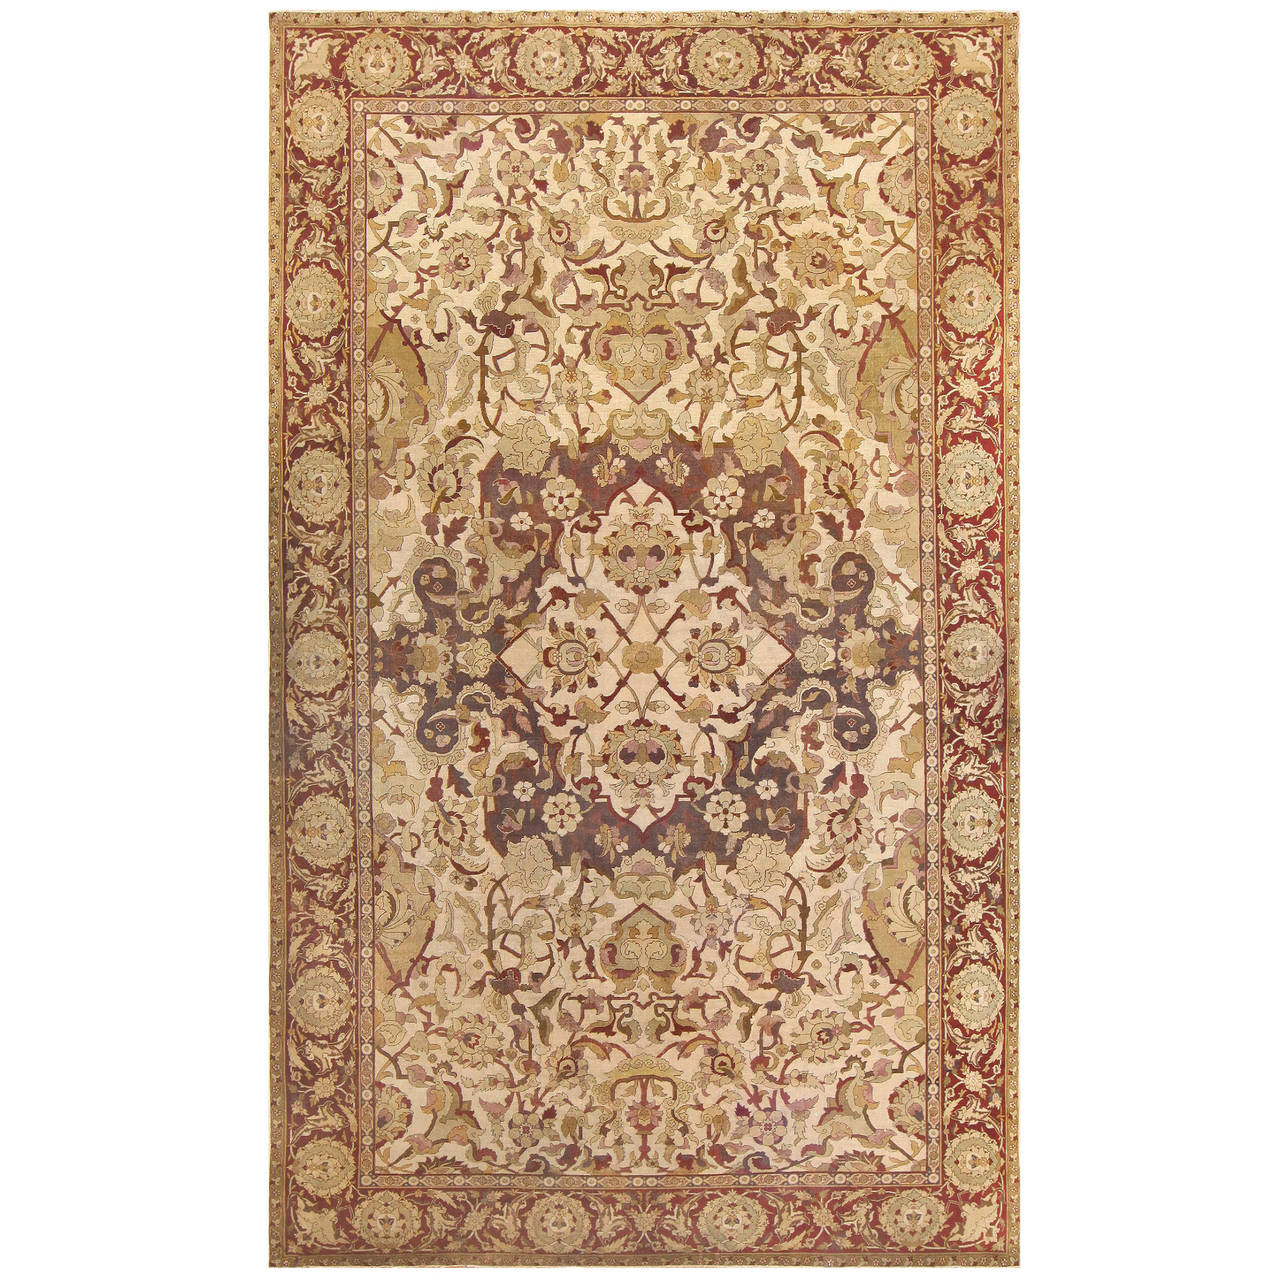 Antique Indian Amritsar Carpet For Sale at 1stdibs